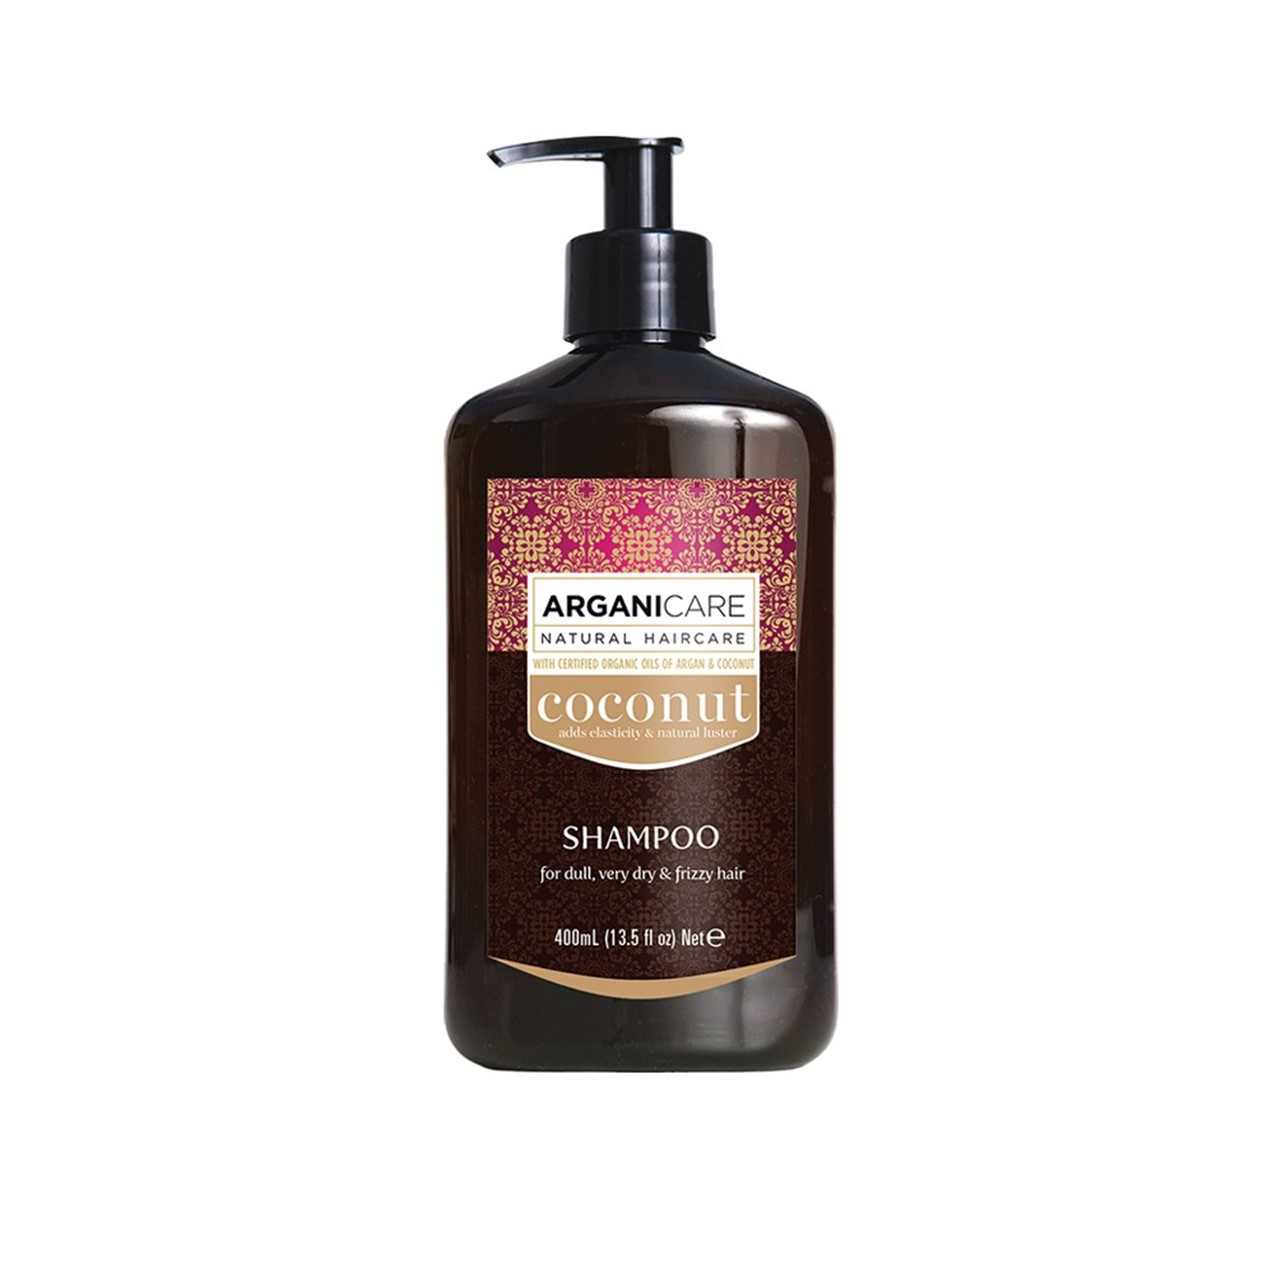 Arganicare Coconut Shampoo 400ml (13.5 fl oz)